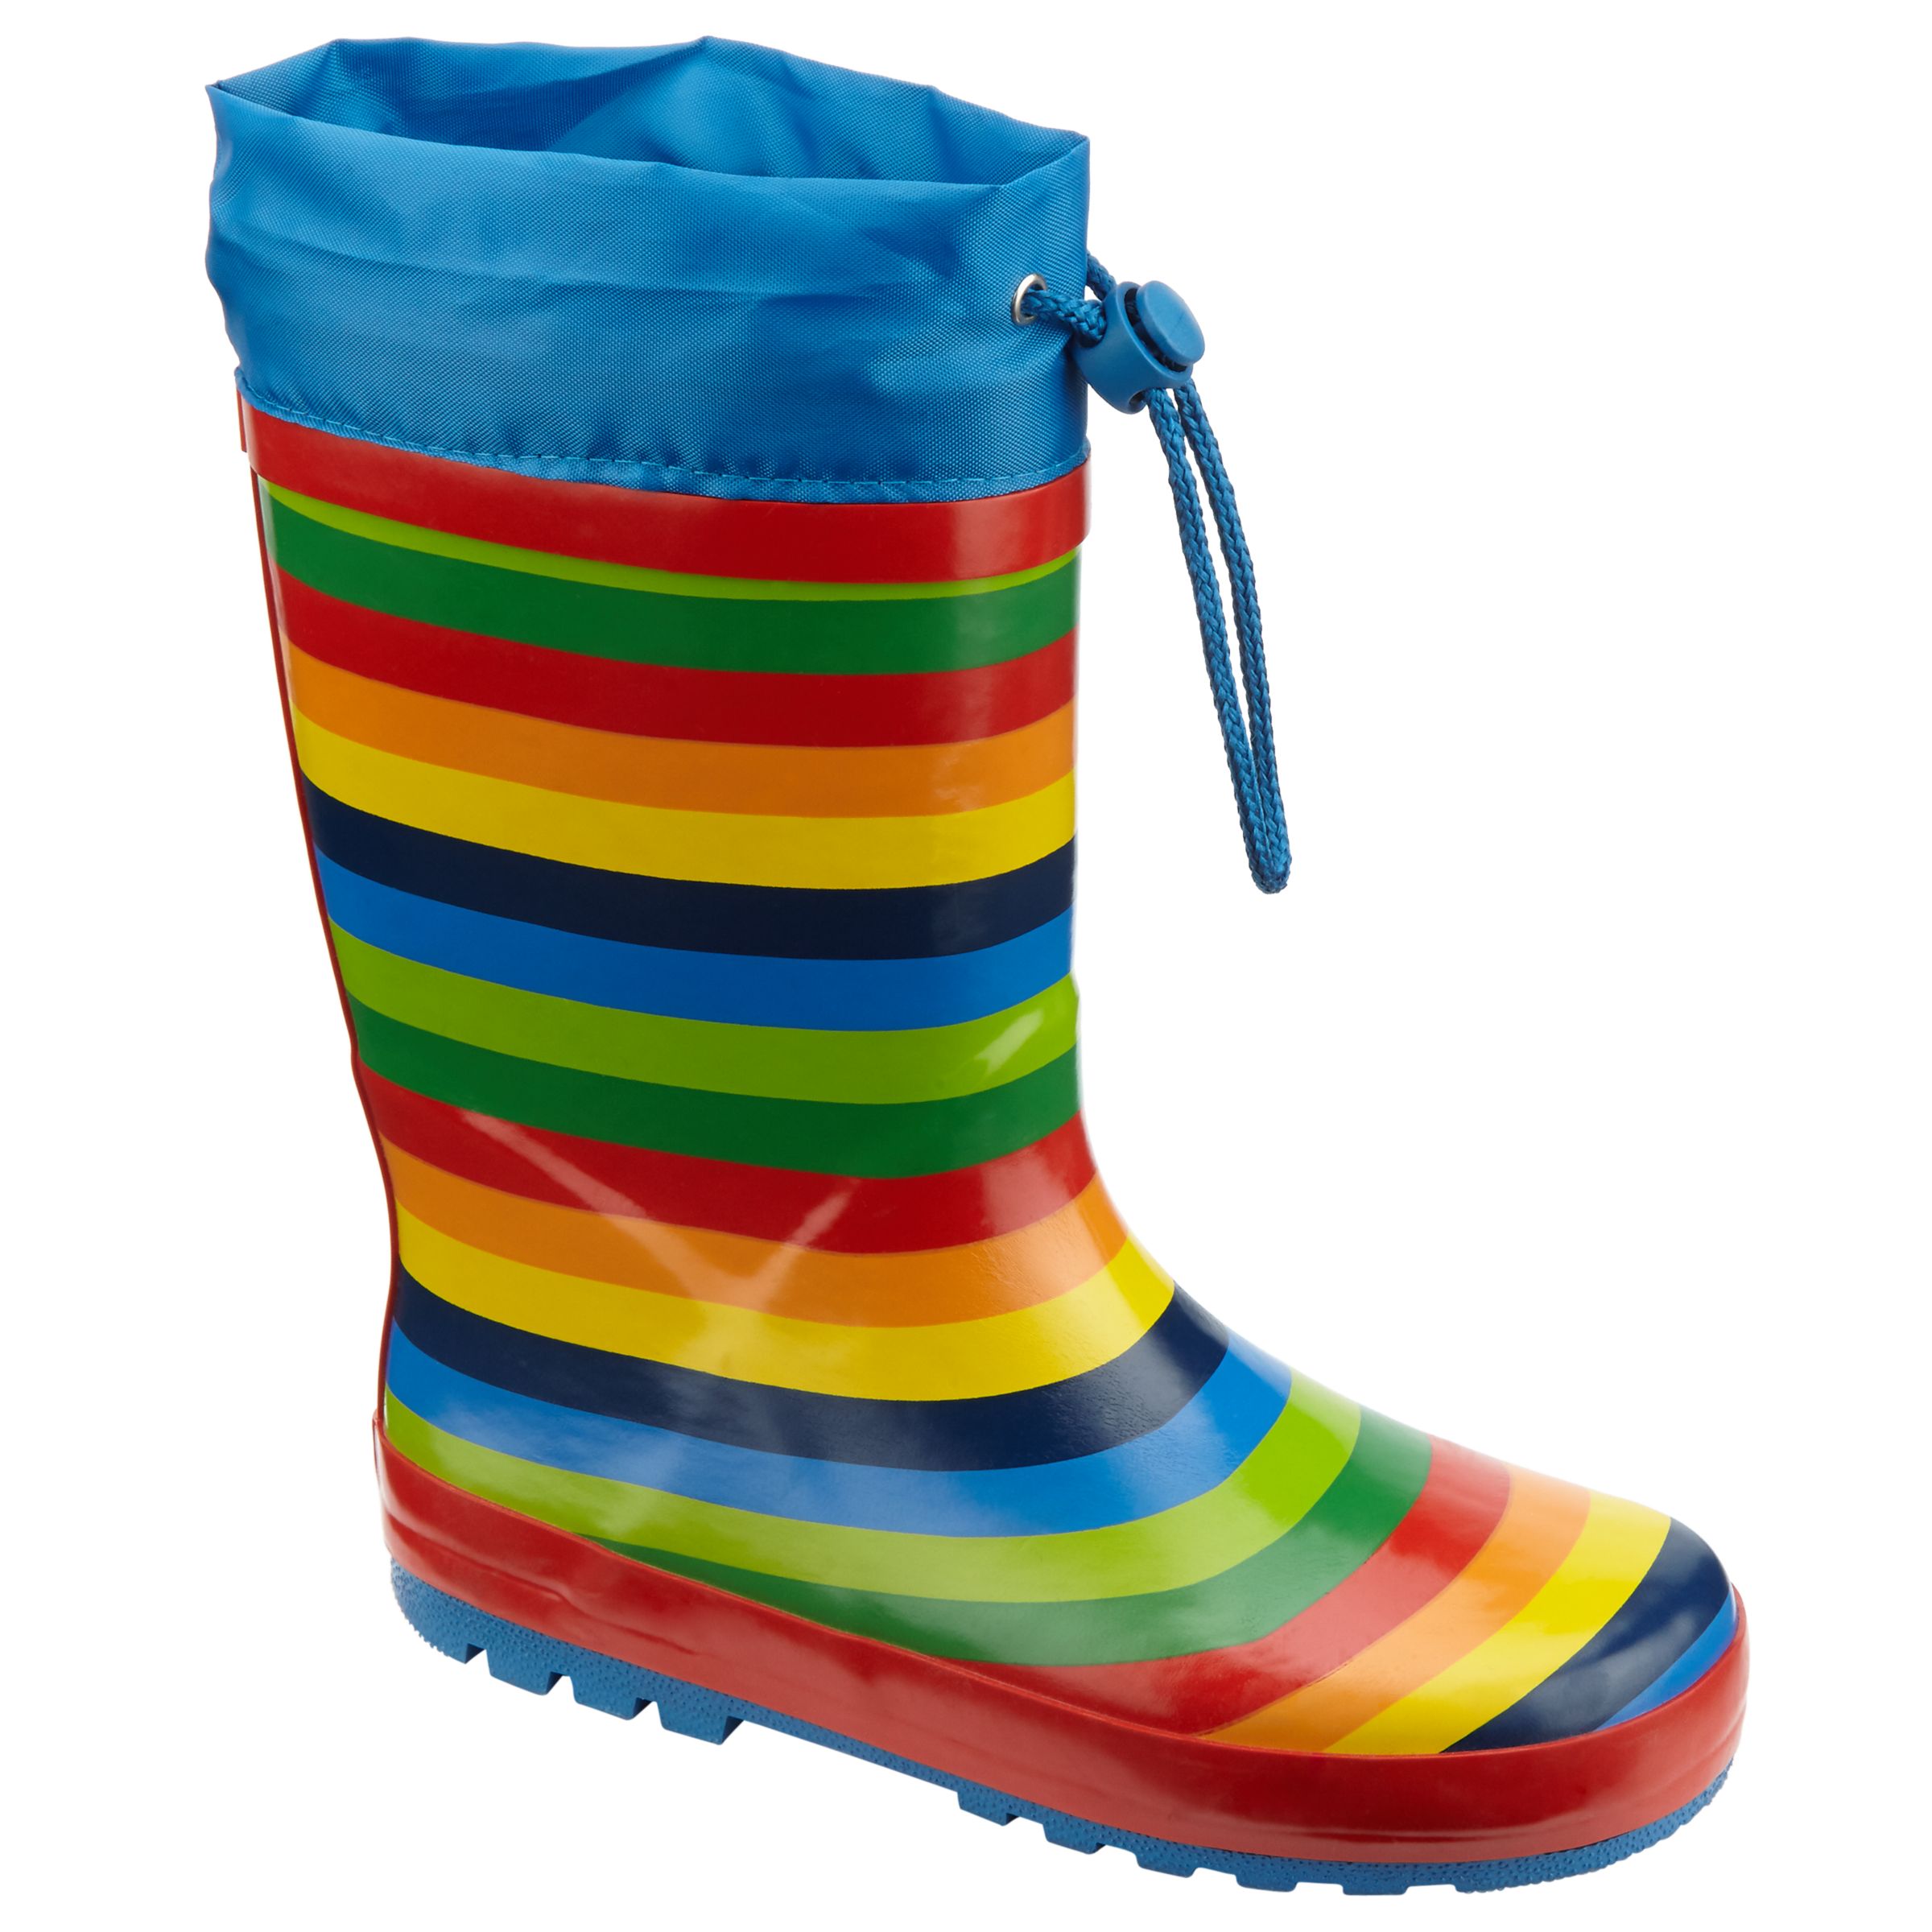 John Lewis & Partners Children's Rainbow Topper Wellington Boots, Multi